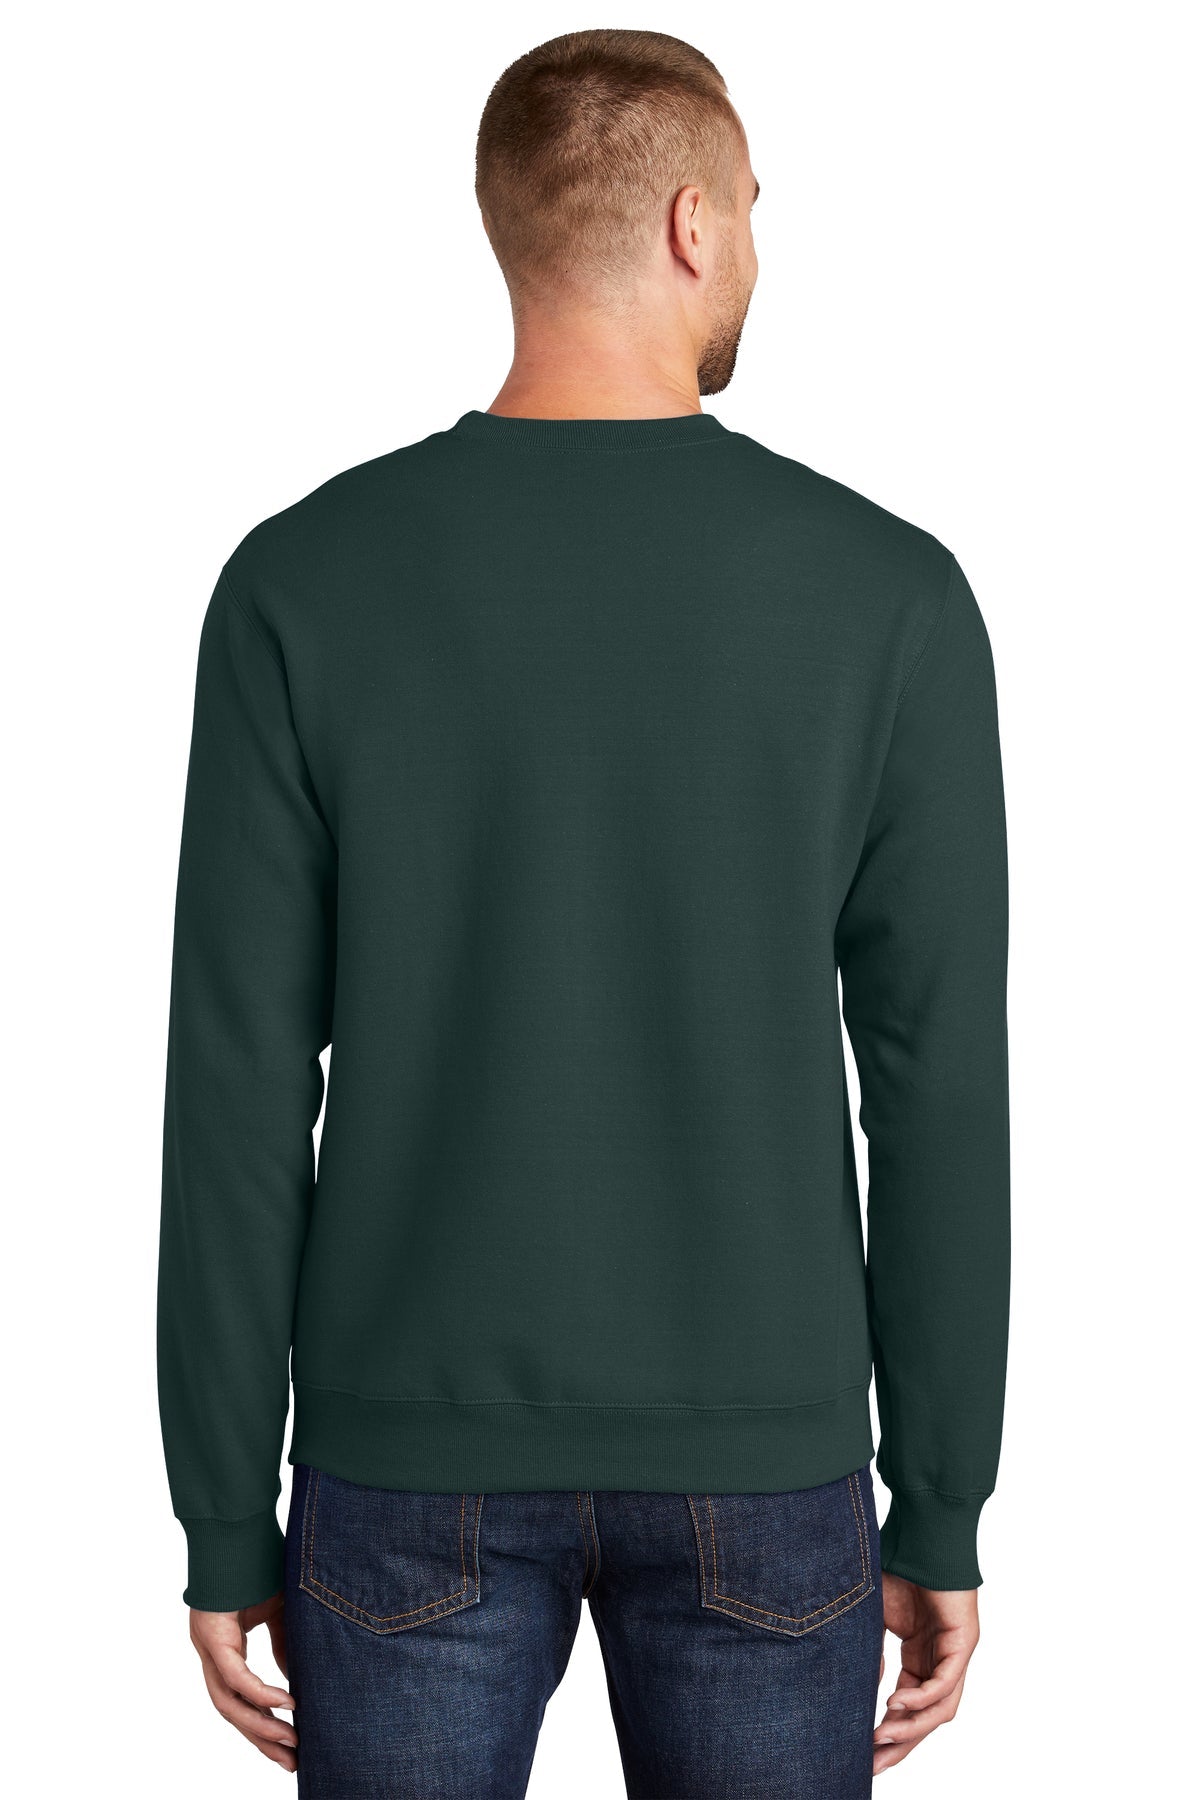 port & company_pc90 _dark green_company_logo_sweatshirts